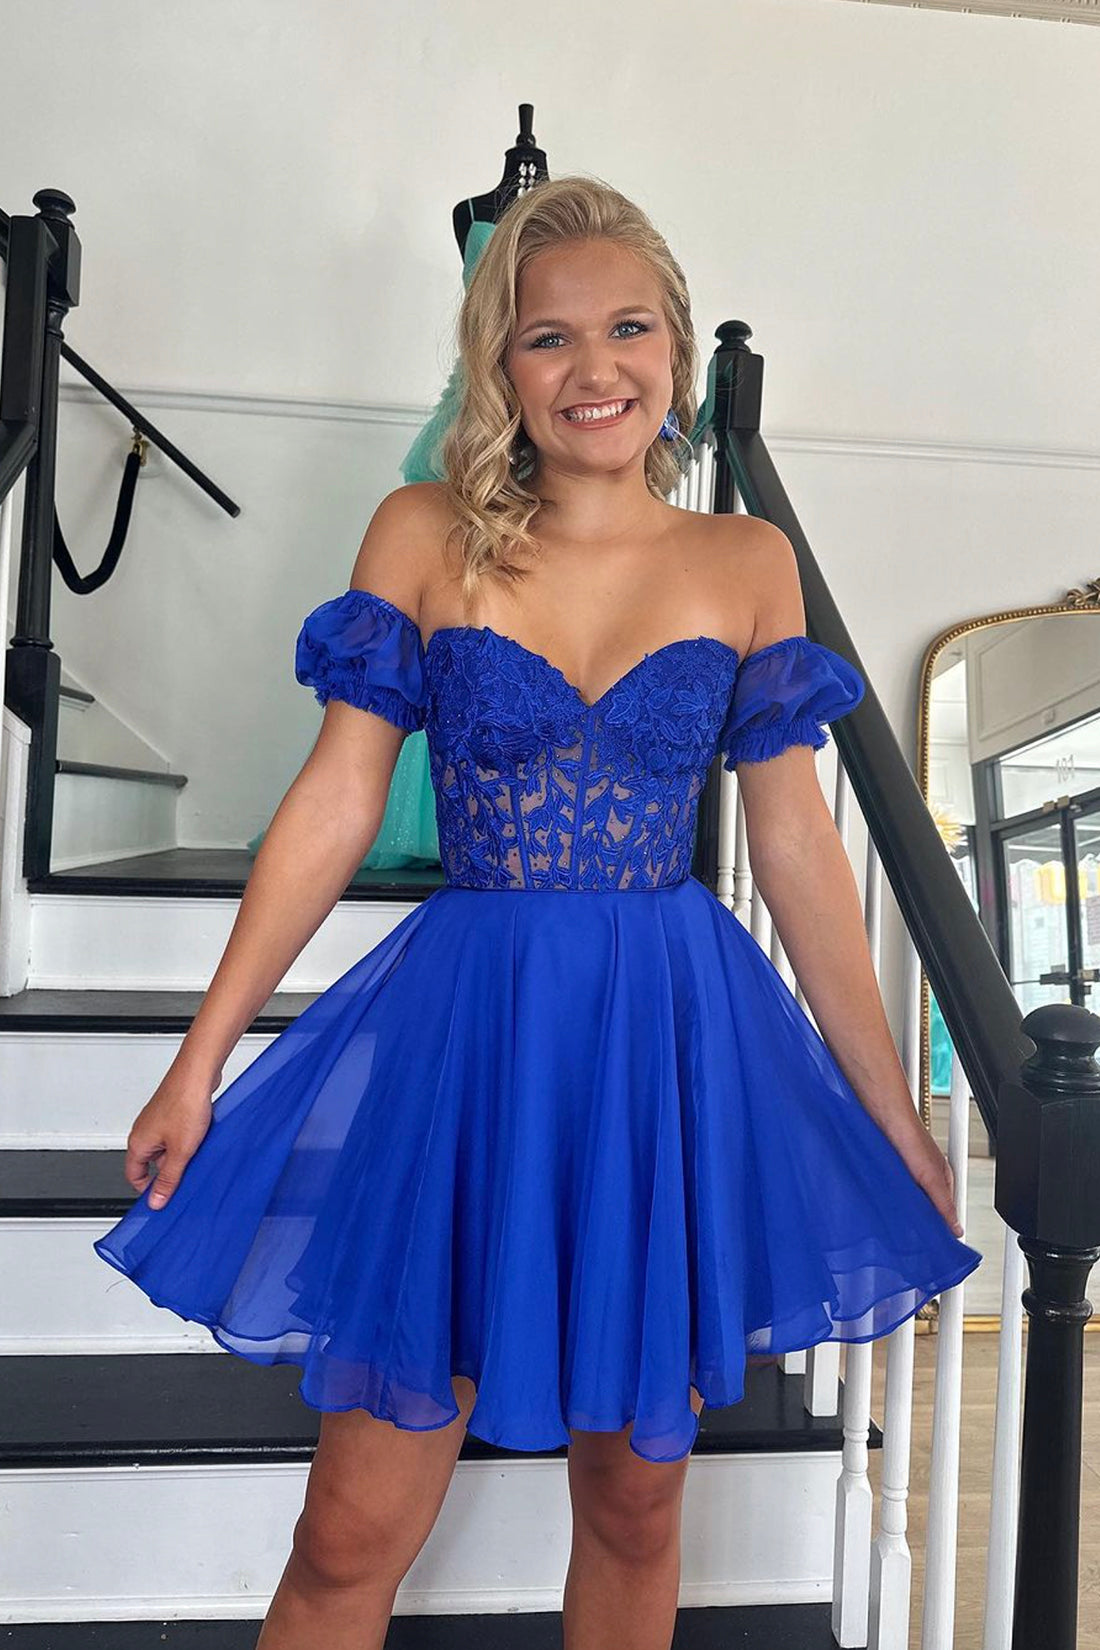 Blue Chiffon Lace Short Prom Dress, A-Line Backless Evening Party Dress